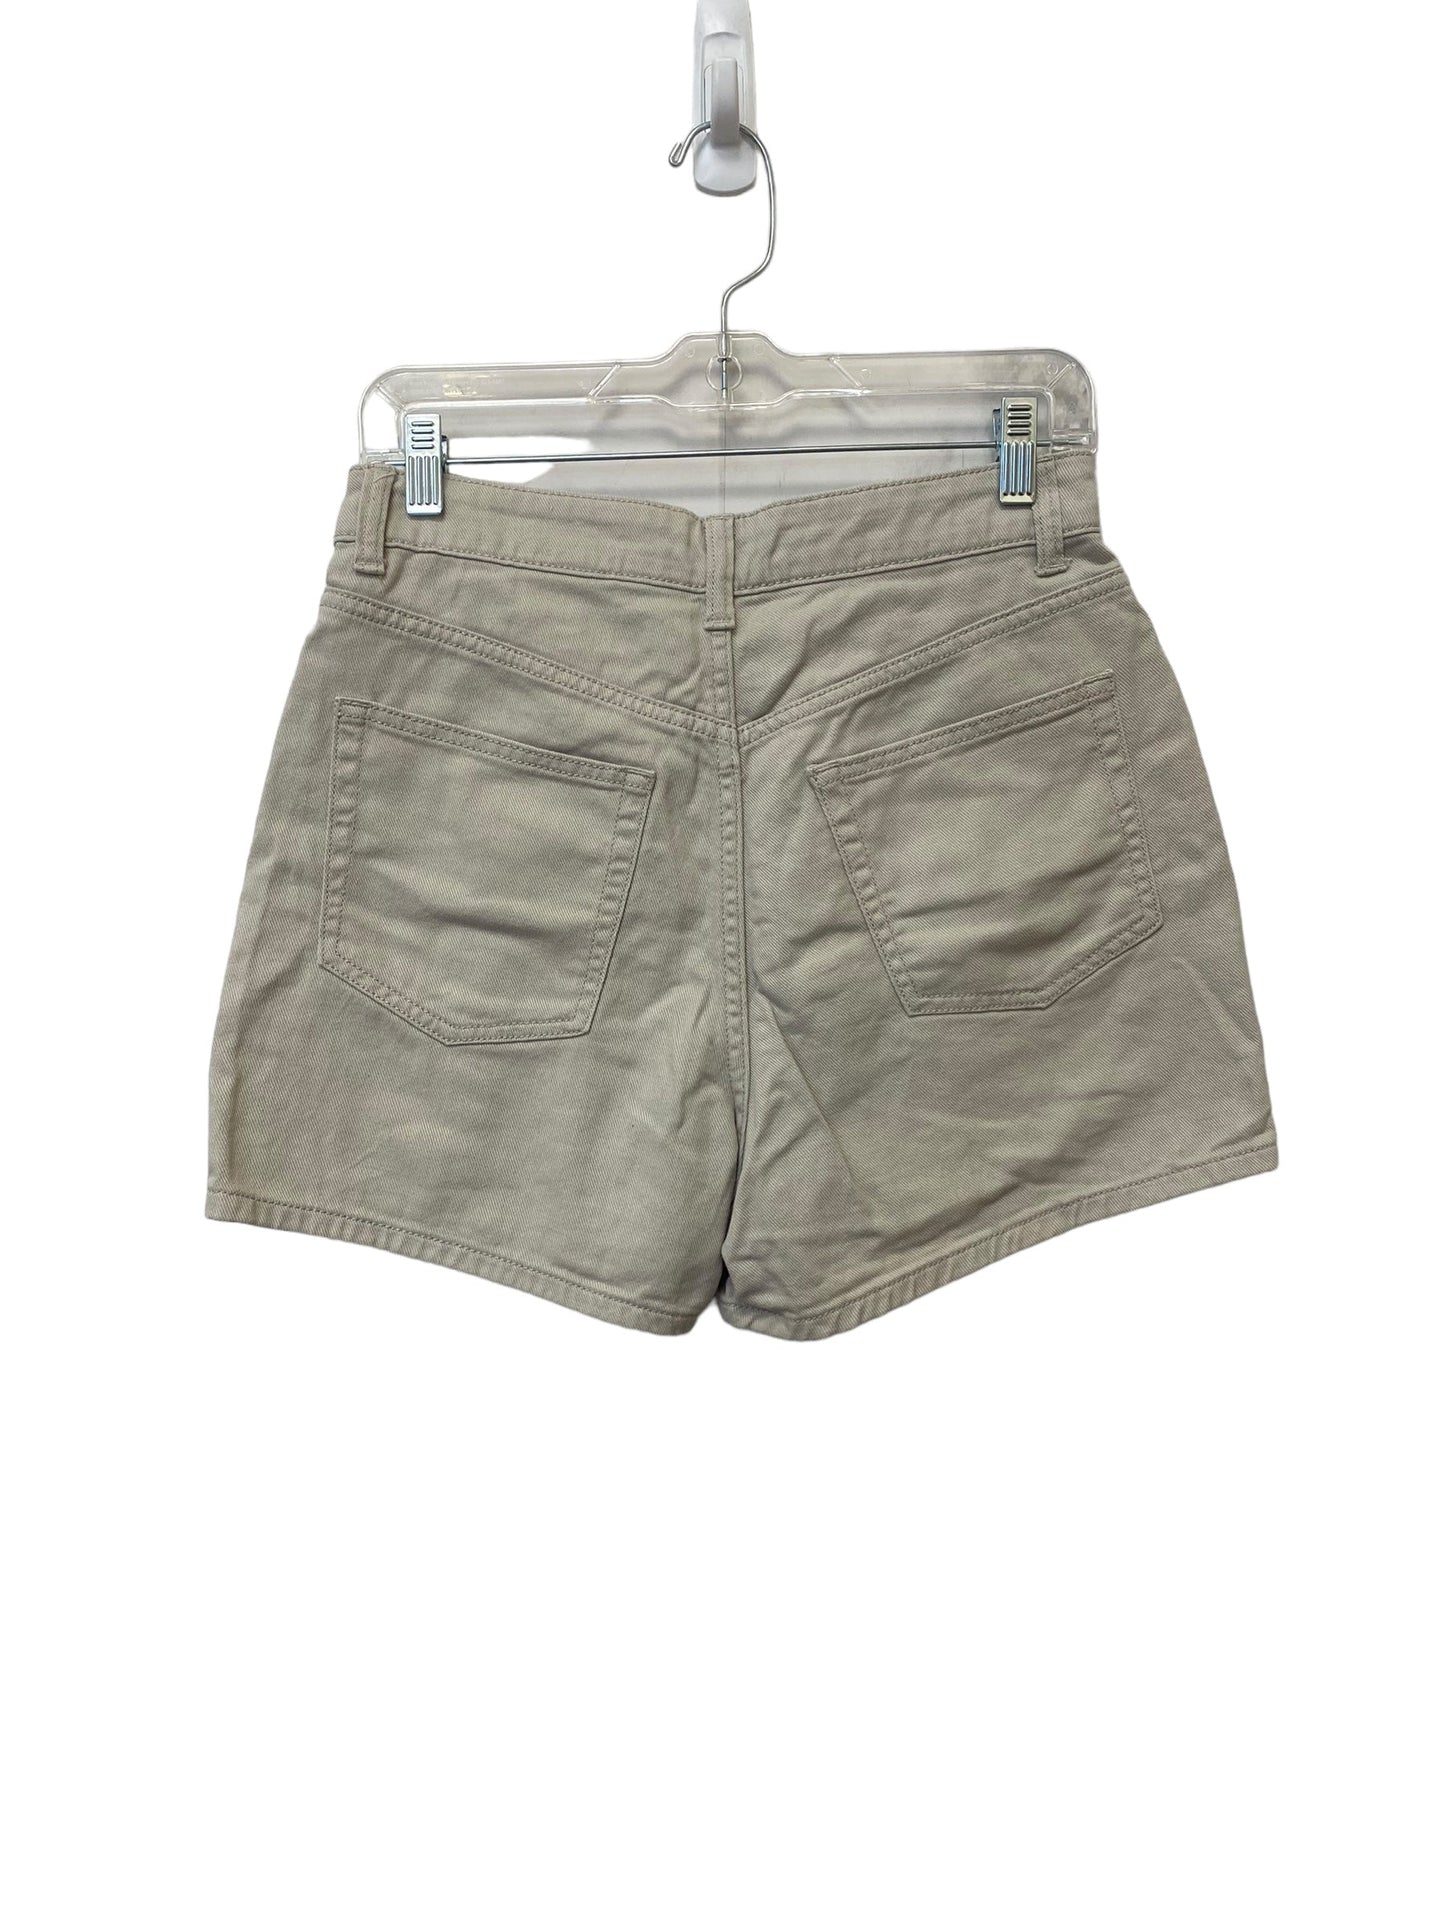 Grey Shorts H&m, Size 6